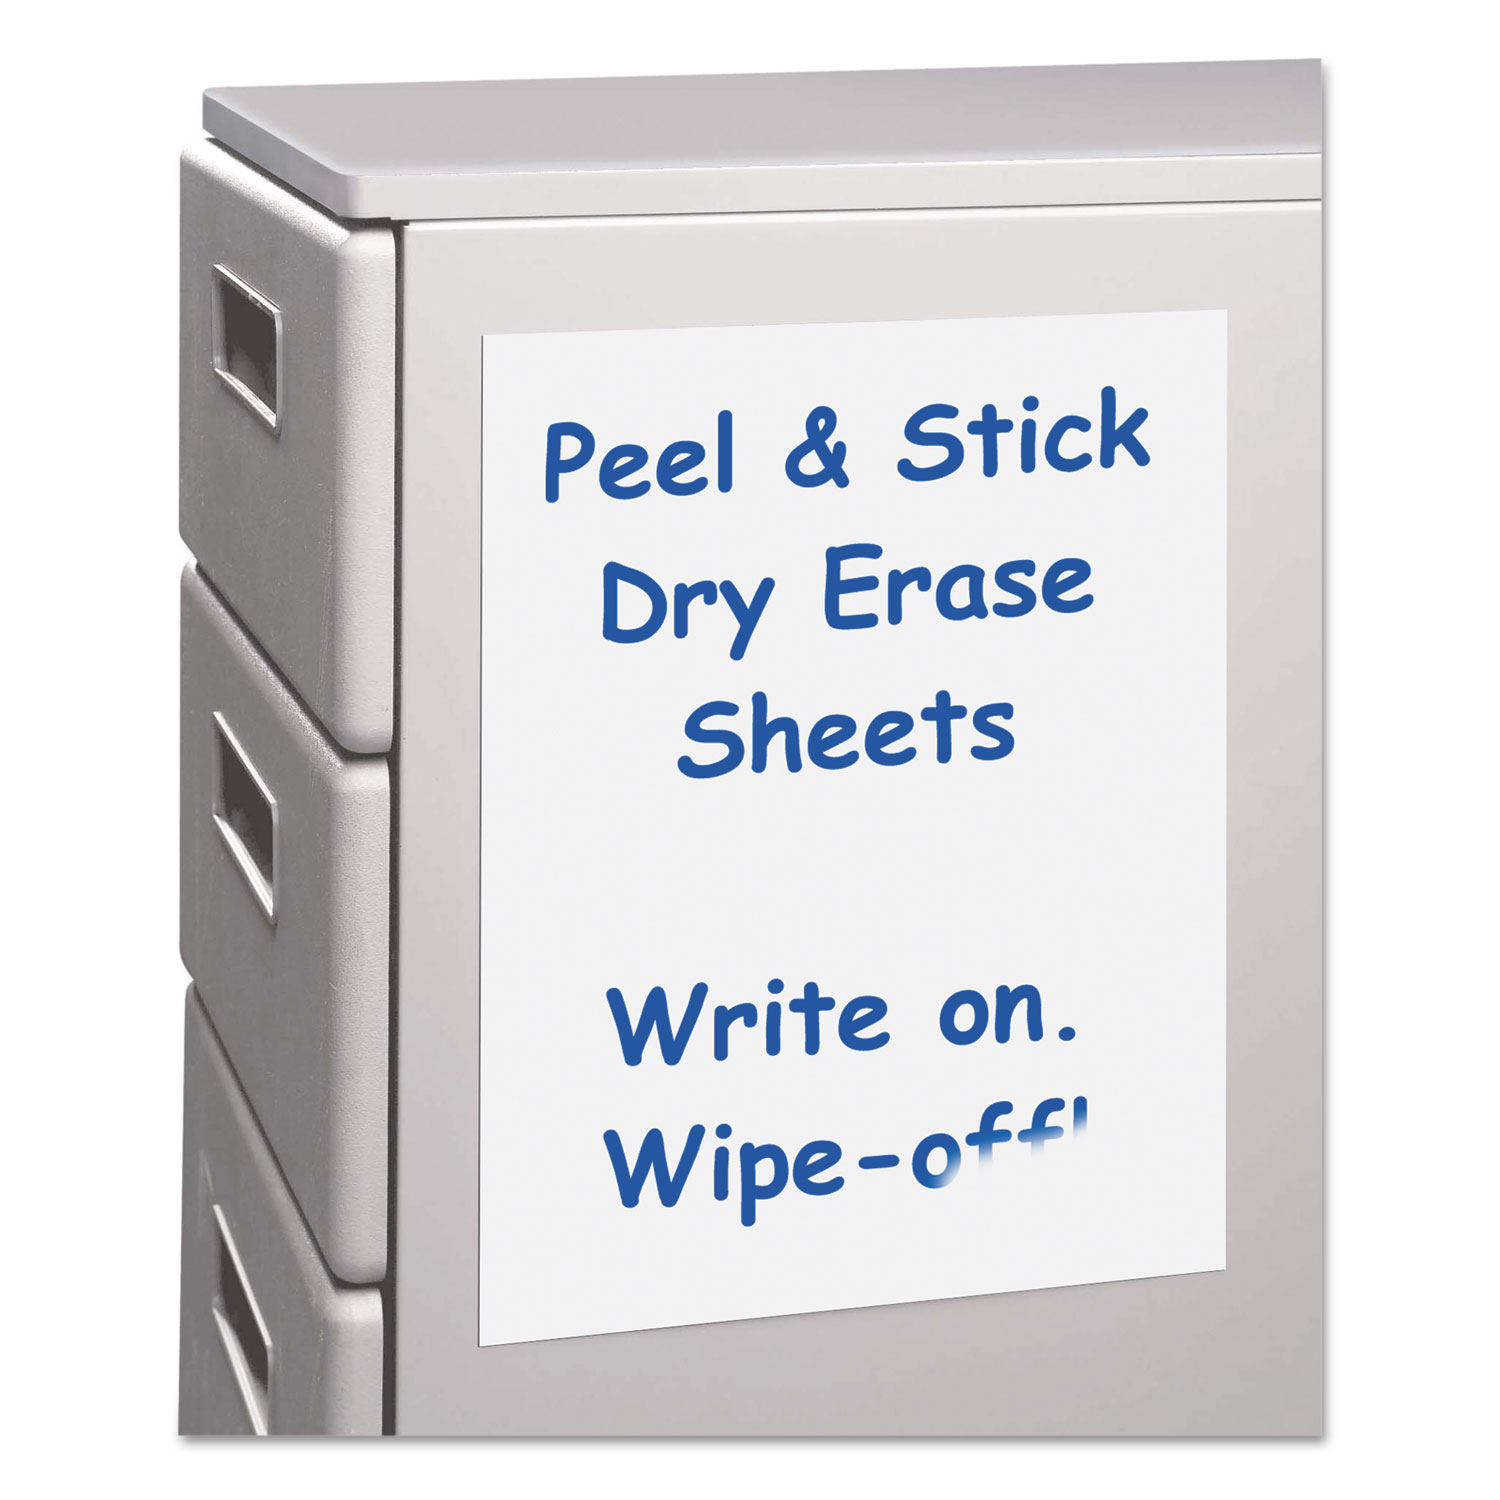  C-Line 57911 Peel and Stick Dry Erase Sheets, 8 1/2 x 11, White, 25 Sheets/Box (CLI57911) 